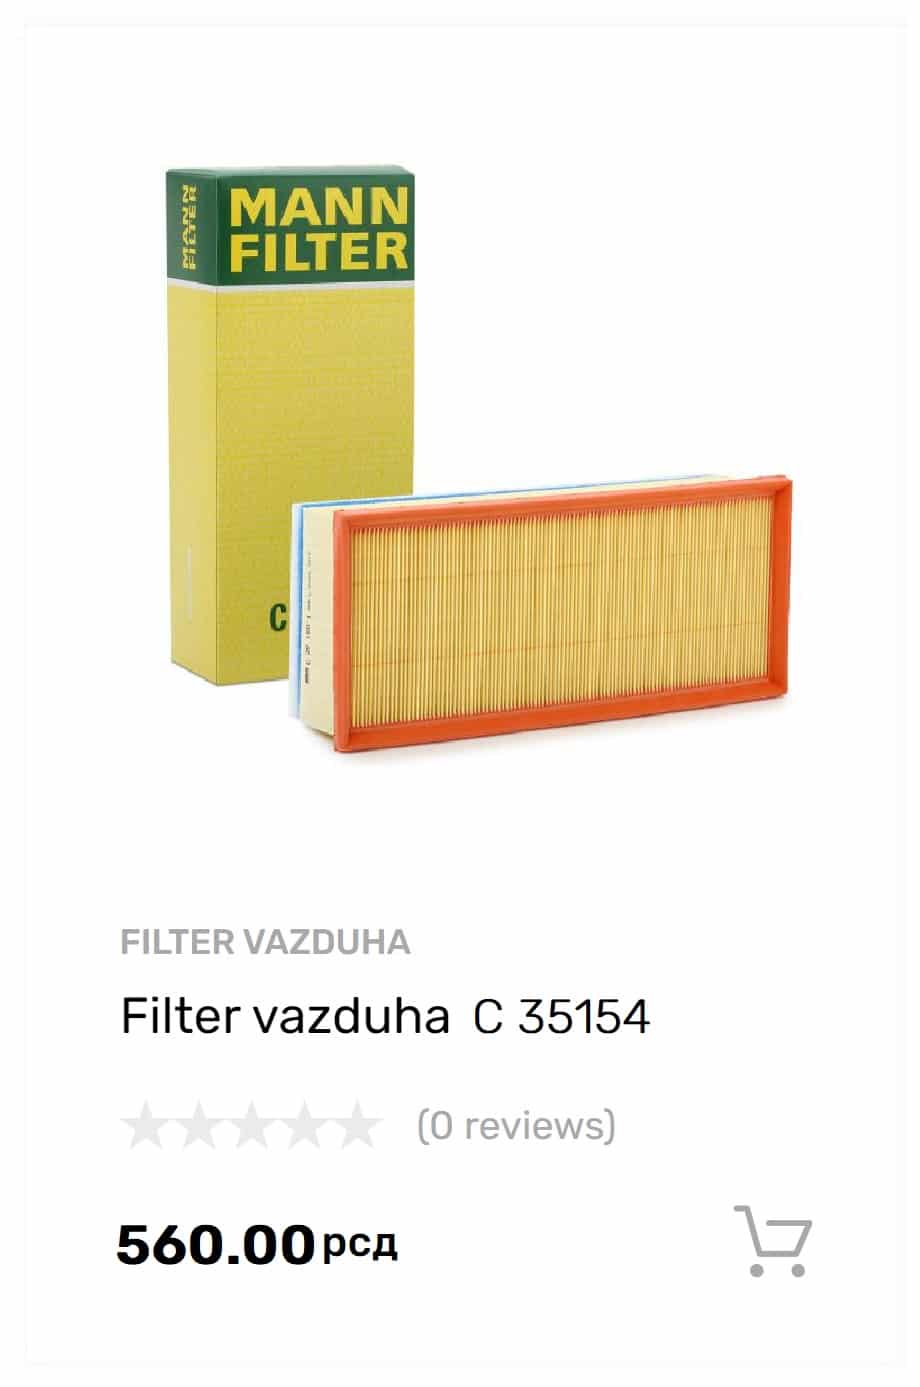 mann filter vazduha, filter vazduha mann